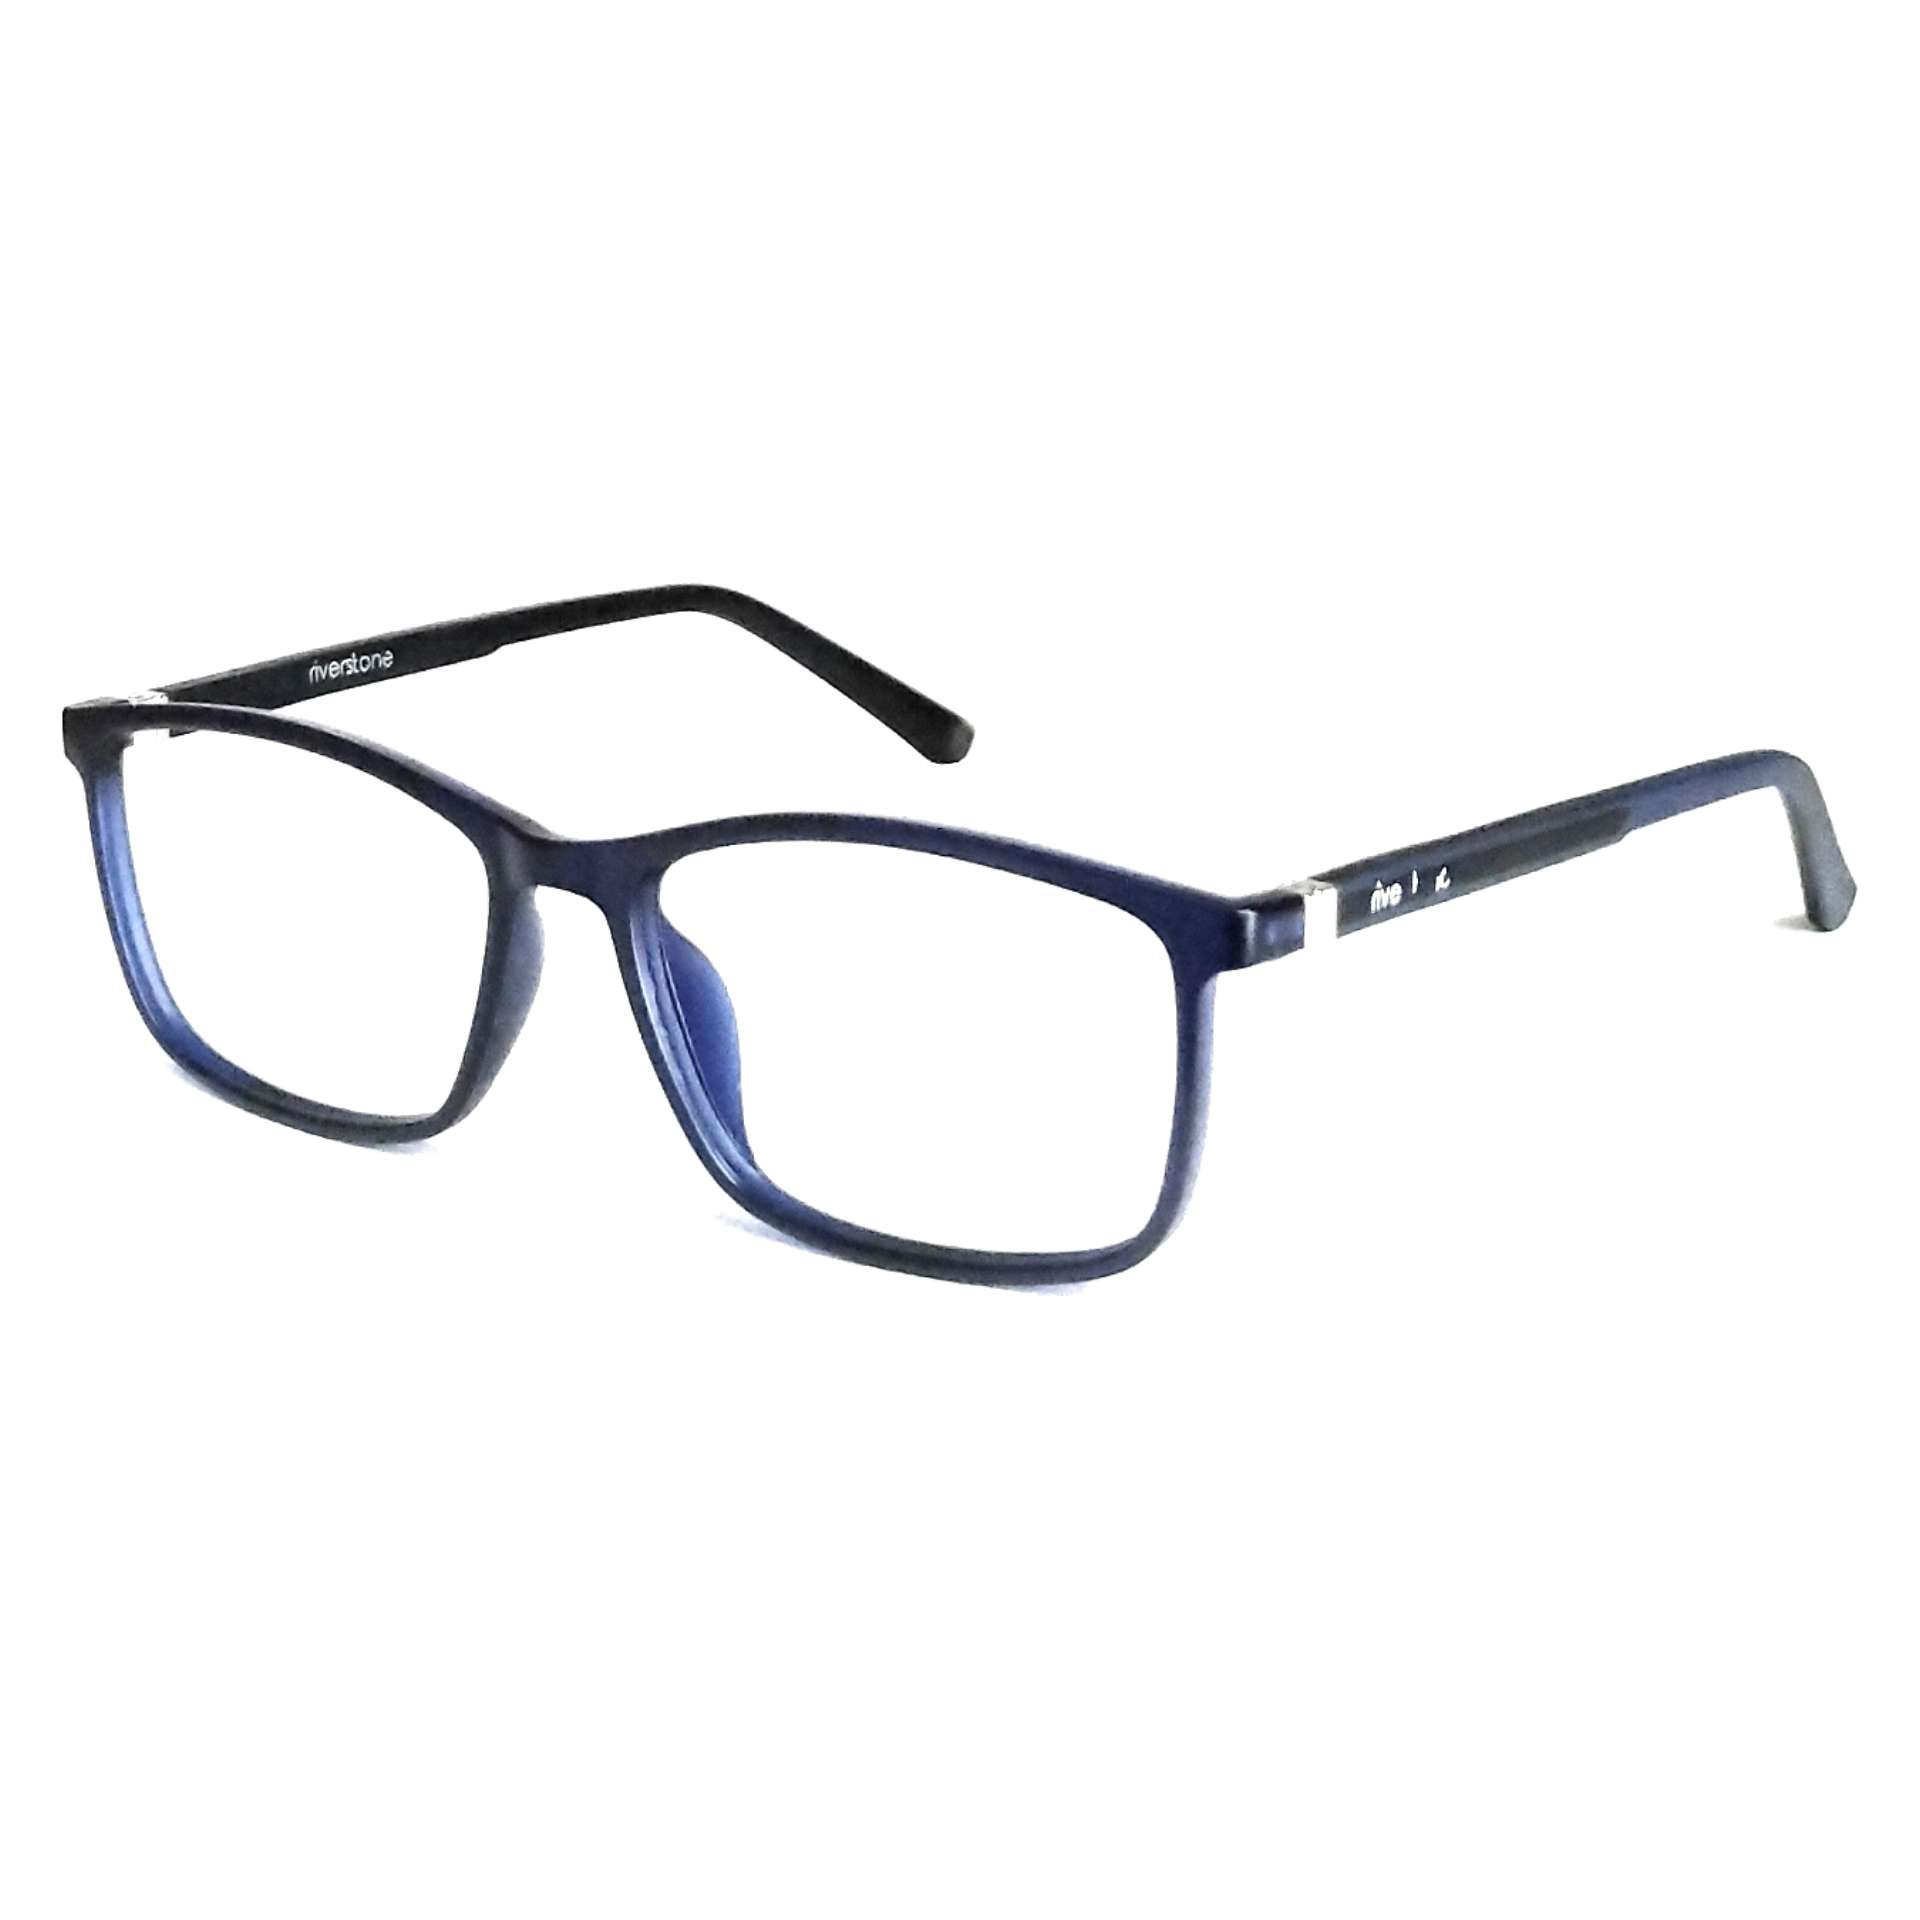 Riverstone Blue TR90 Medium Eyeglass Frame